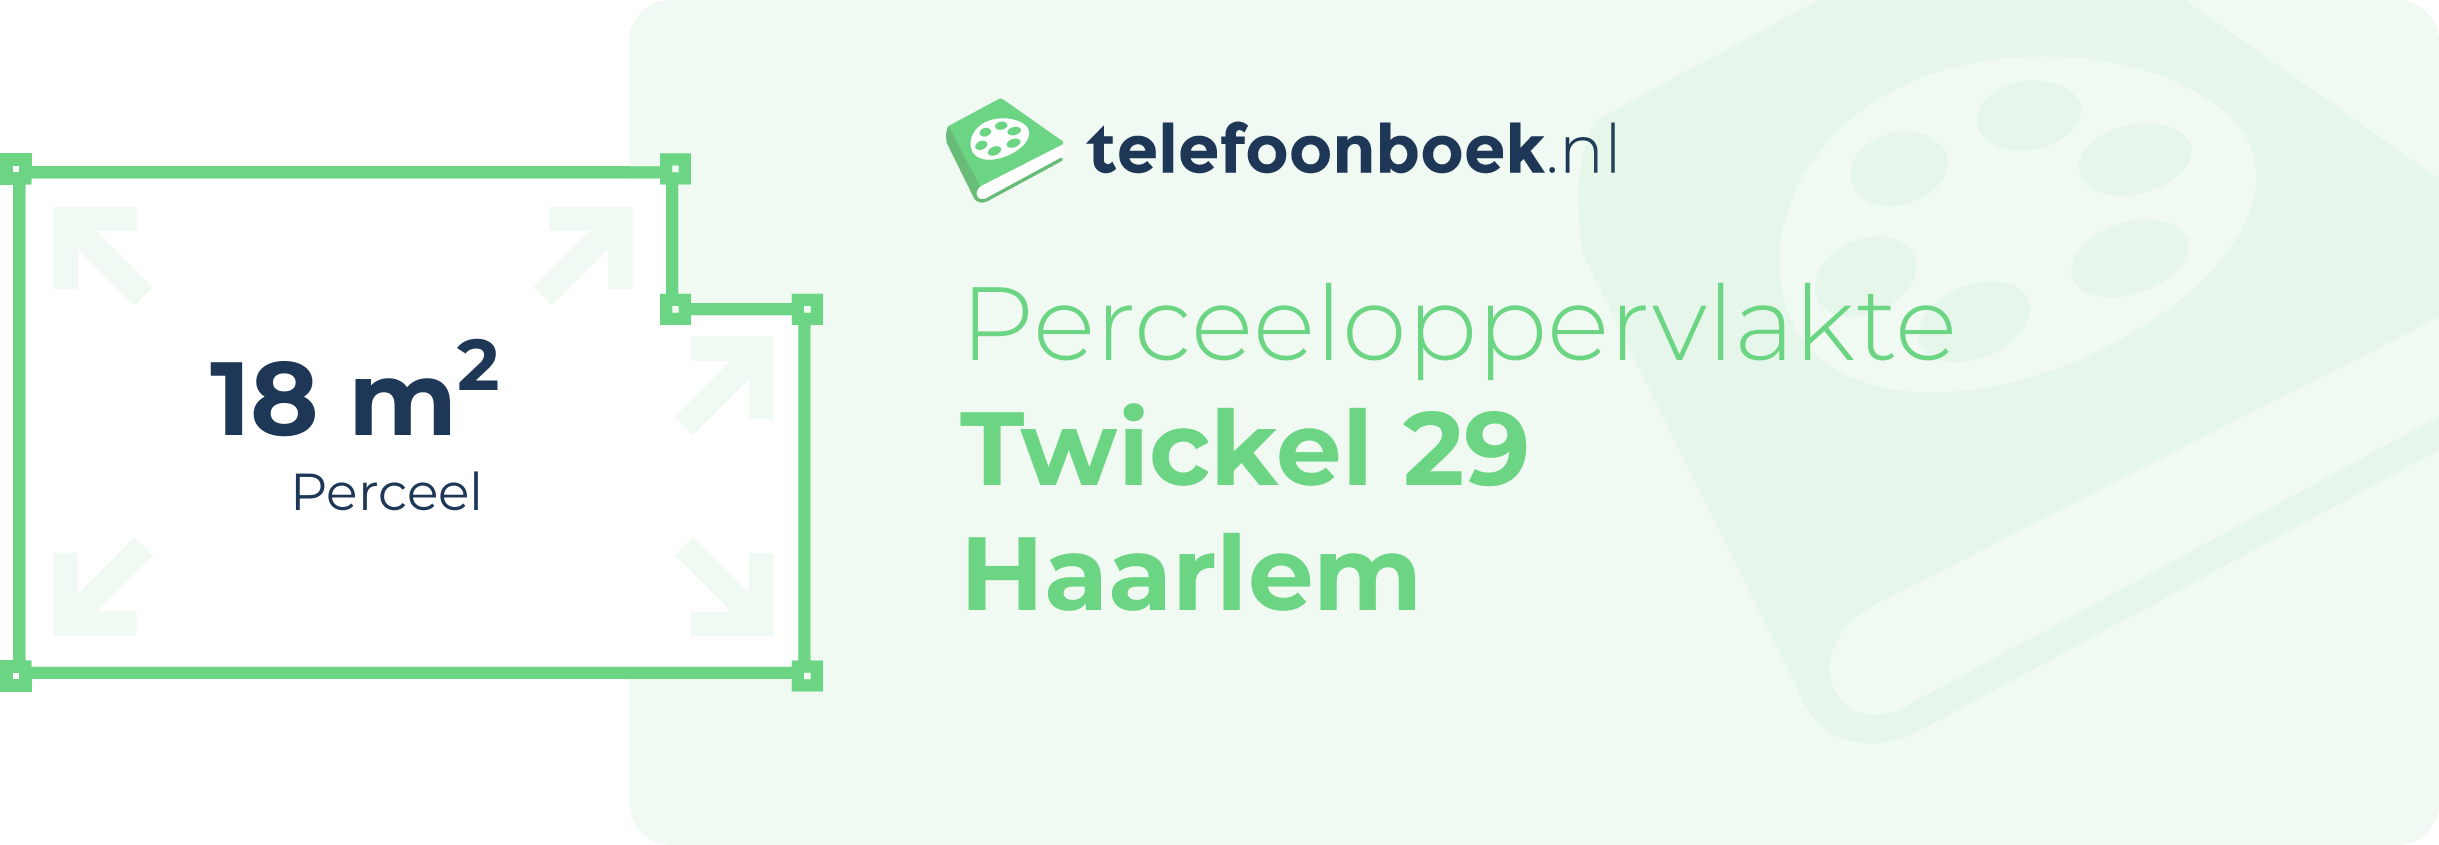 Perceeloppervlakte Twickel 29 Haarlem